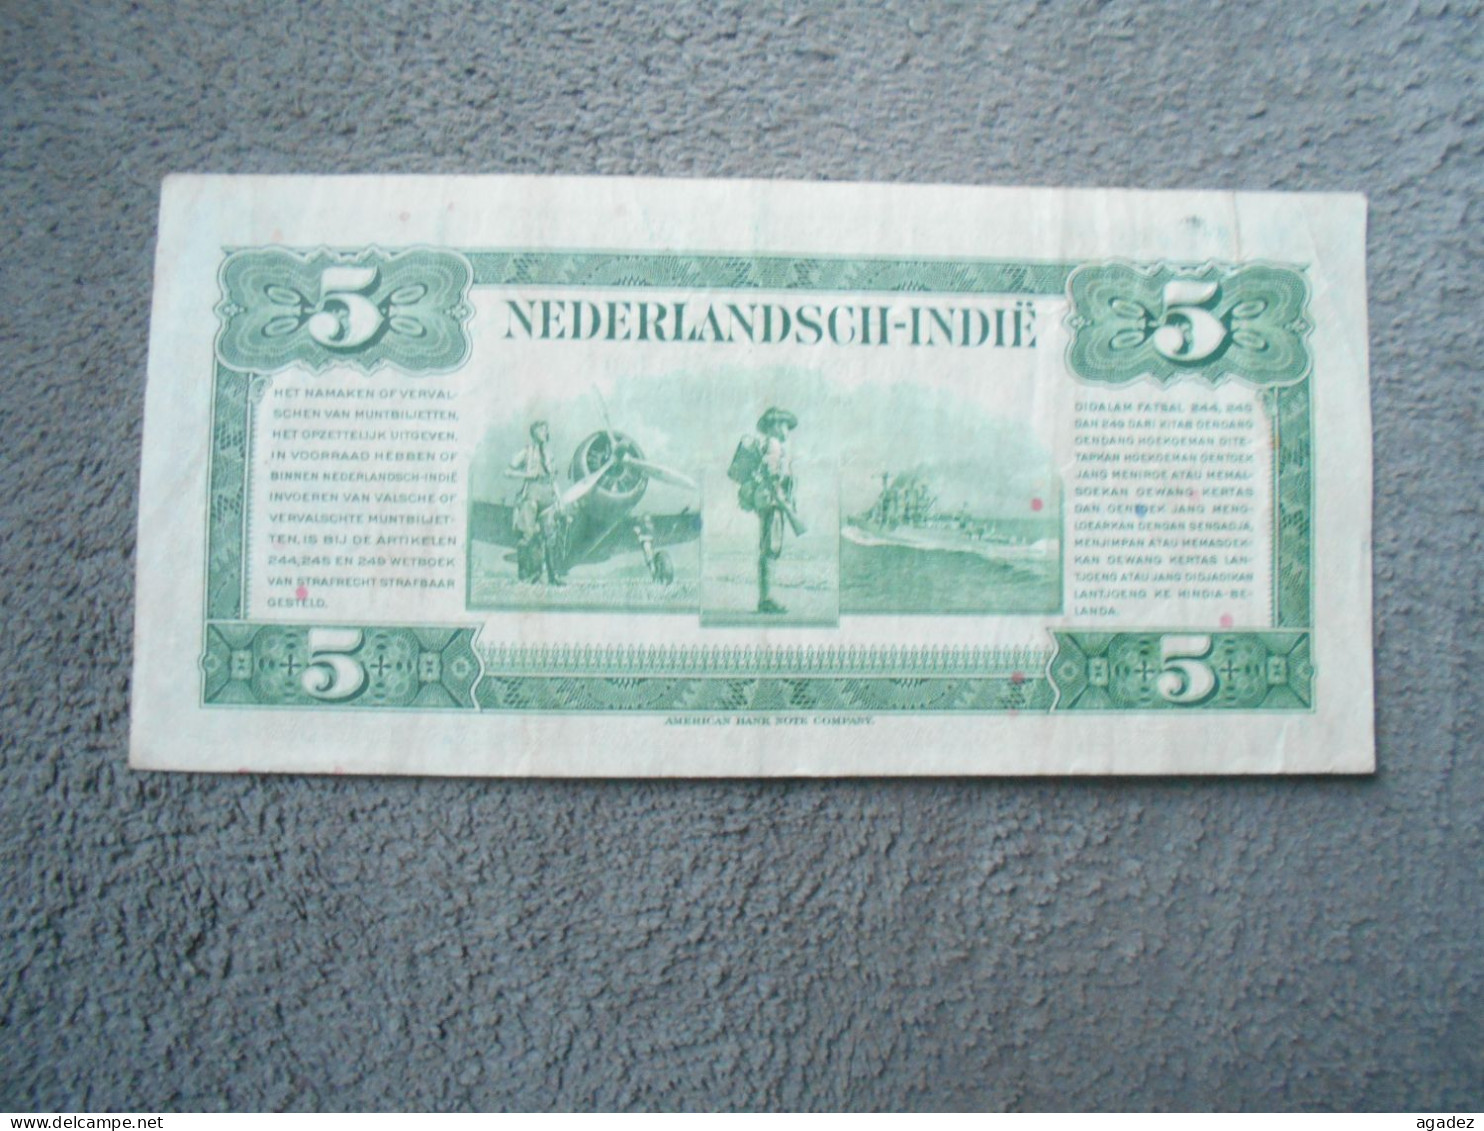 Ancien Billet De Banque Nederlandsch Indie Indes Neerlandaises  5 Gulden 1943 - Indien